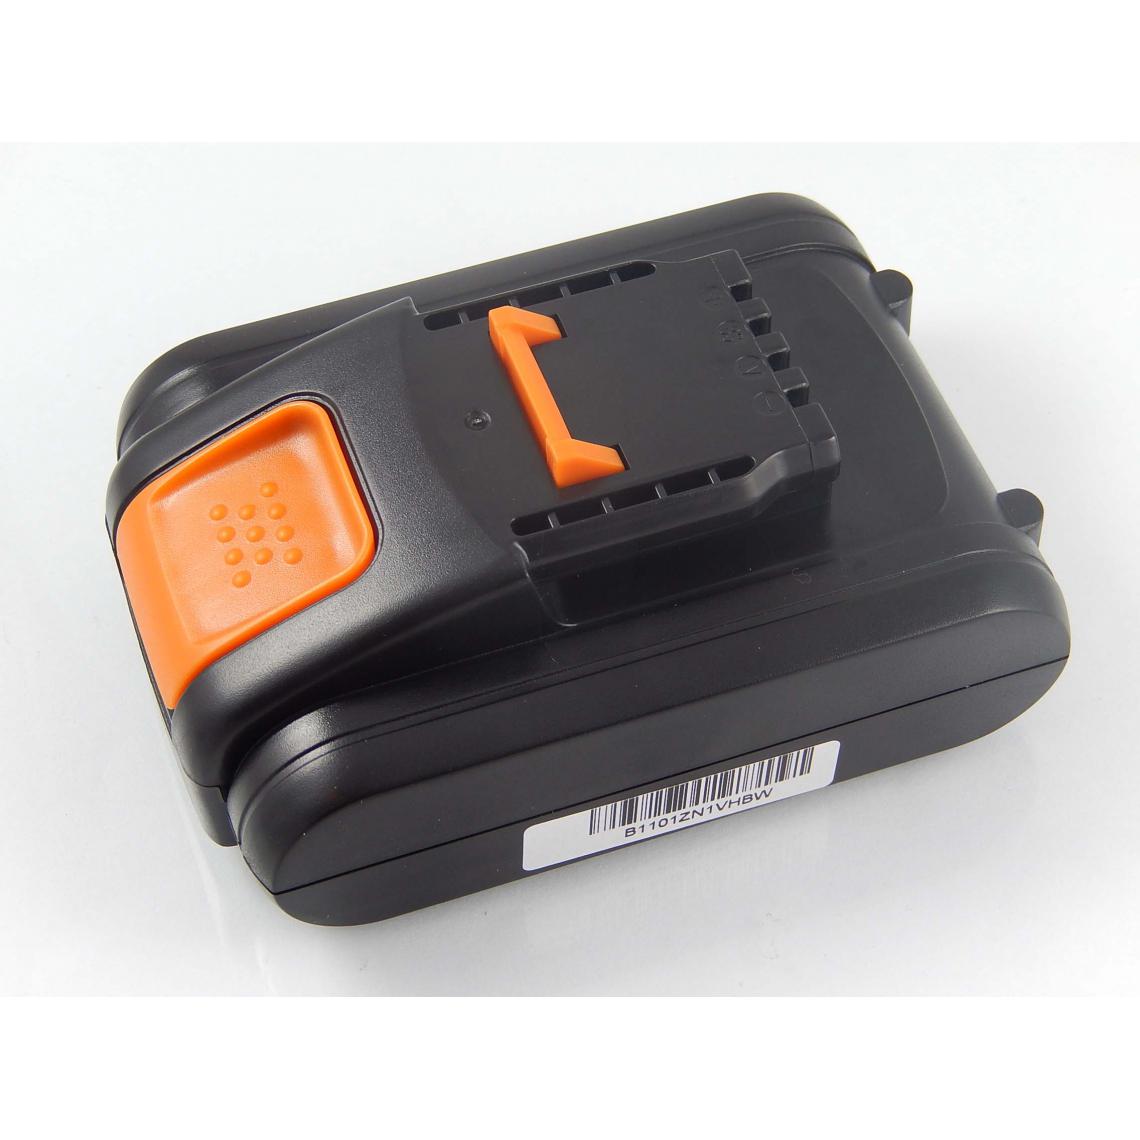 Vhbw - vhbw Batterie compatible avec Worx WG160.4, WG160E, WG160E.5, WG163, WG163E, WG163E.1 outil électrique (2000mAh Li-ion 20 V) - Clouterie